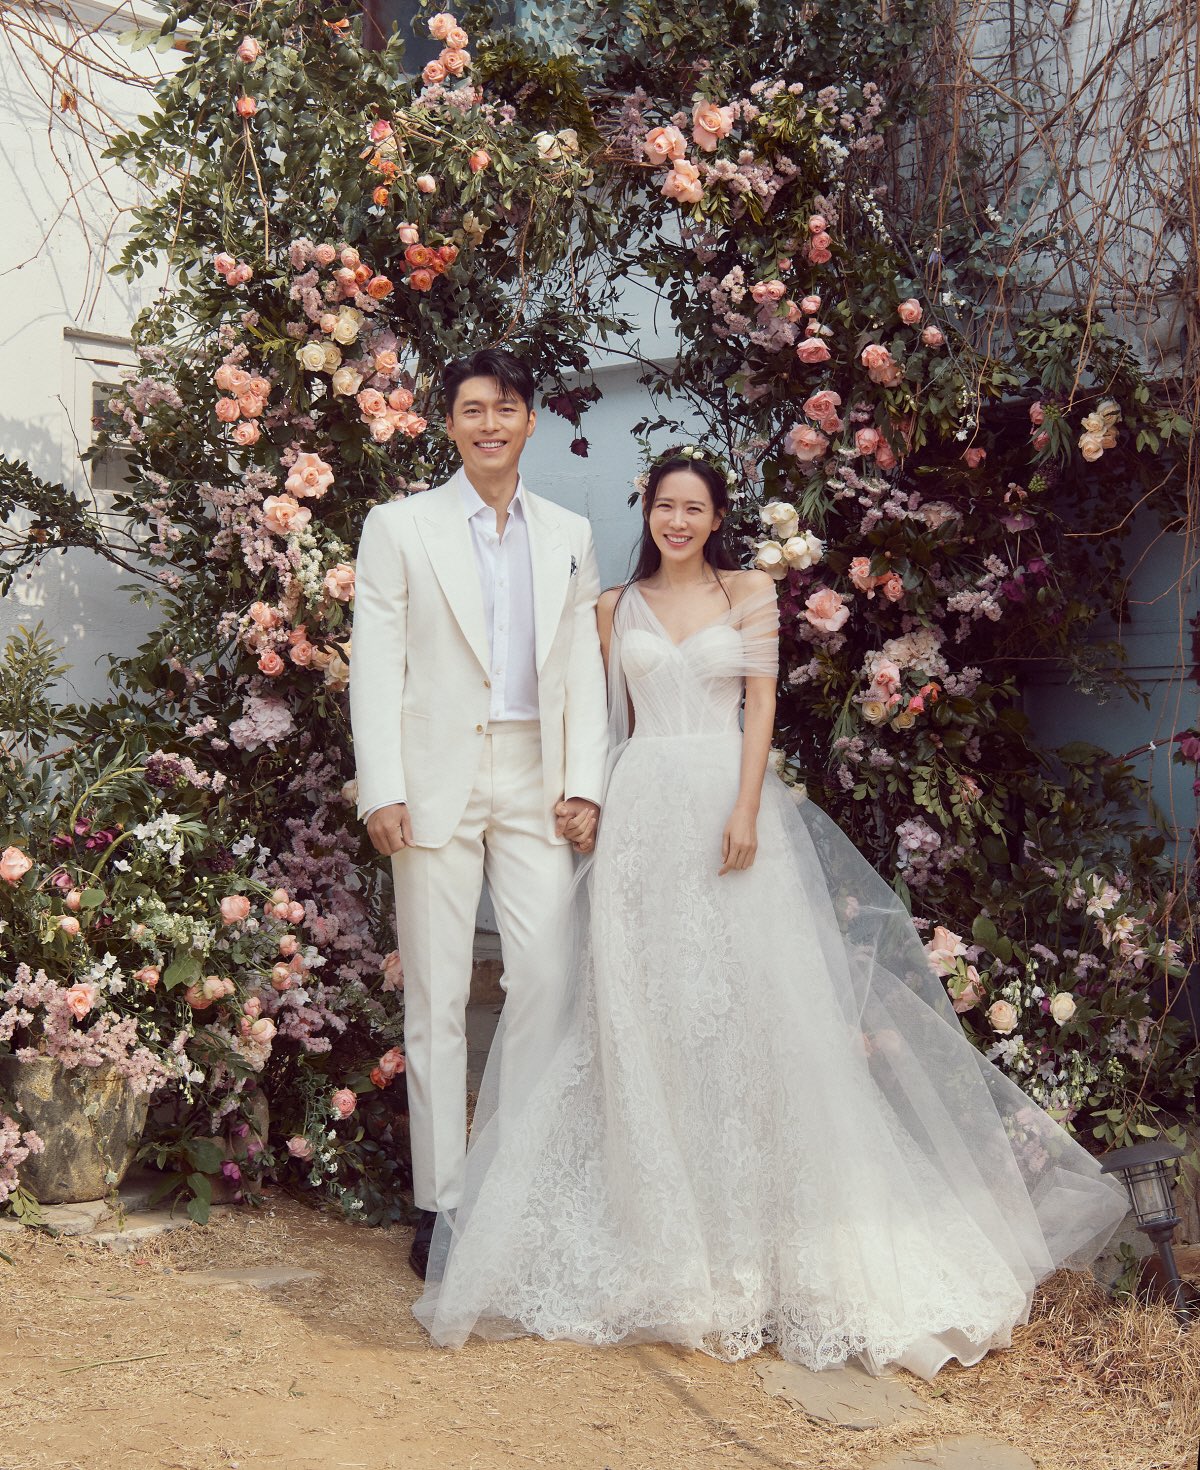 Hyunbin and Son Yejin's wedding photoshoot.